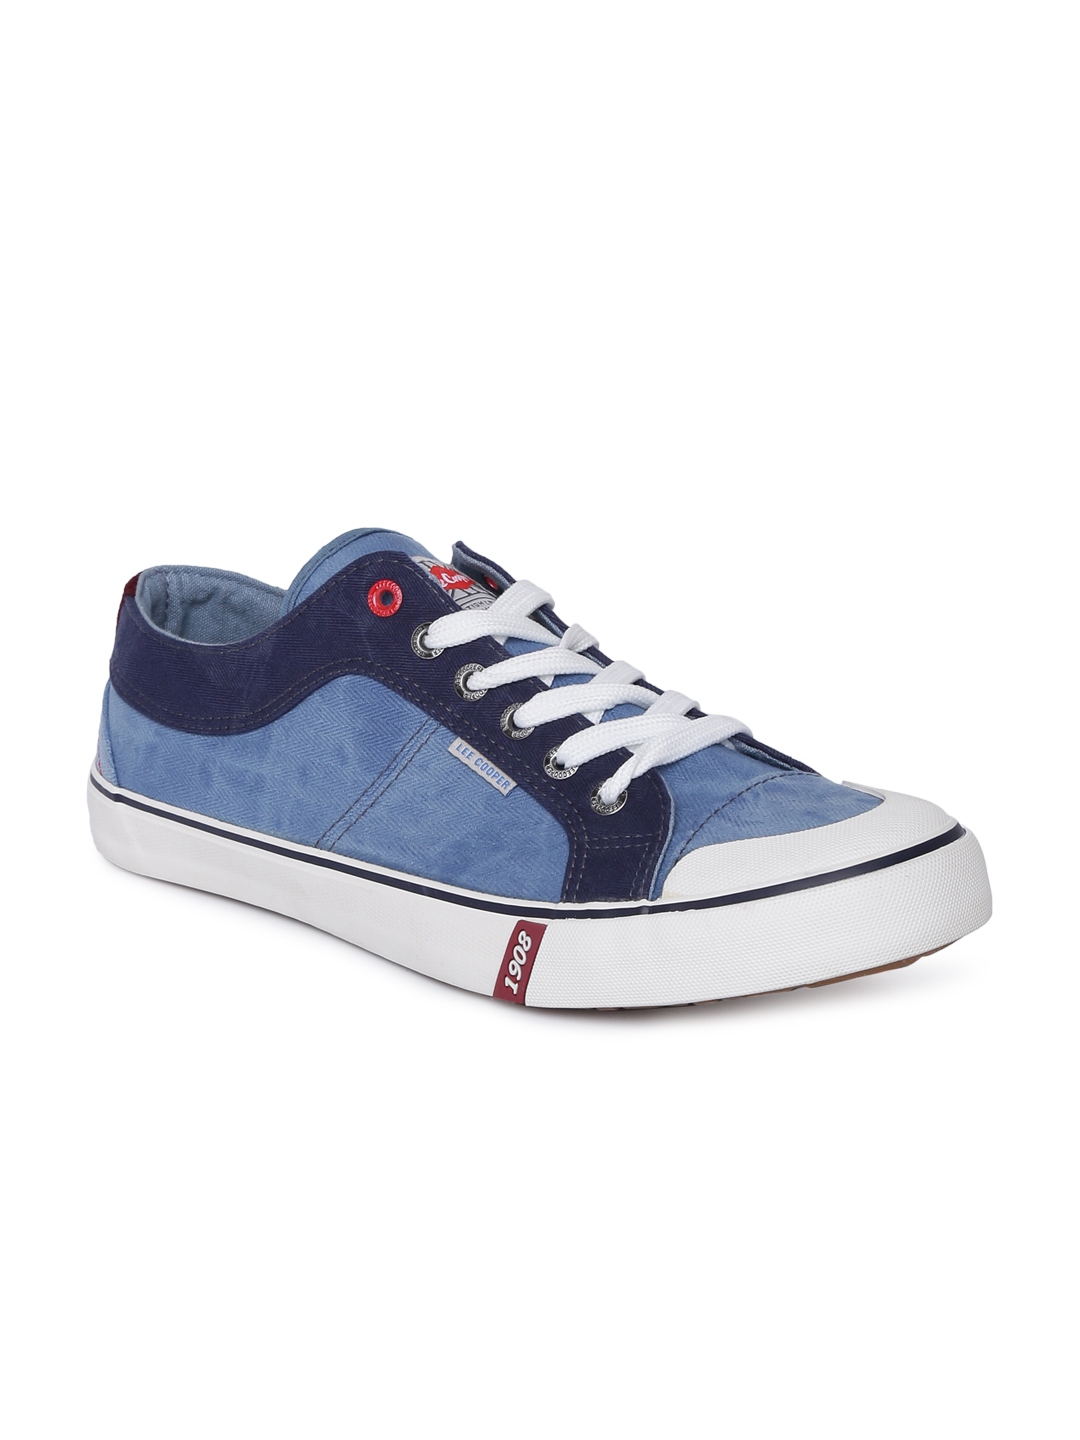 Buy Lee Cooper Men Blue Sneakers - Casual Shoes for Men 8464951 | Myntra